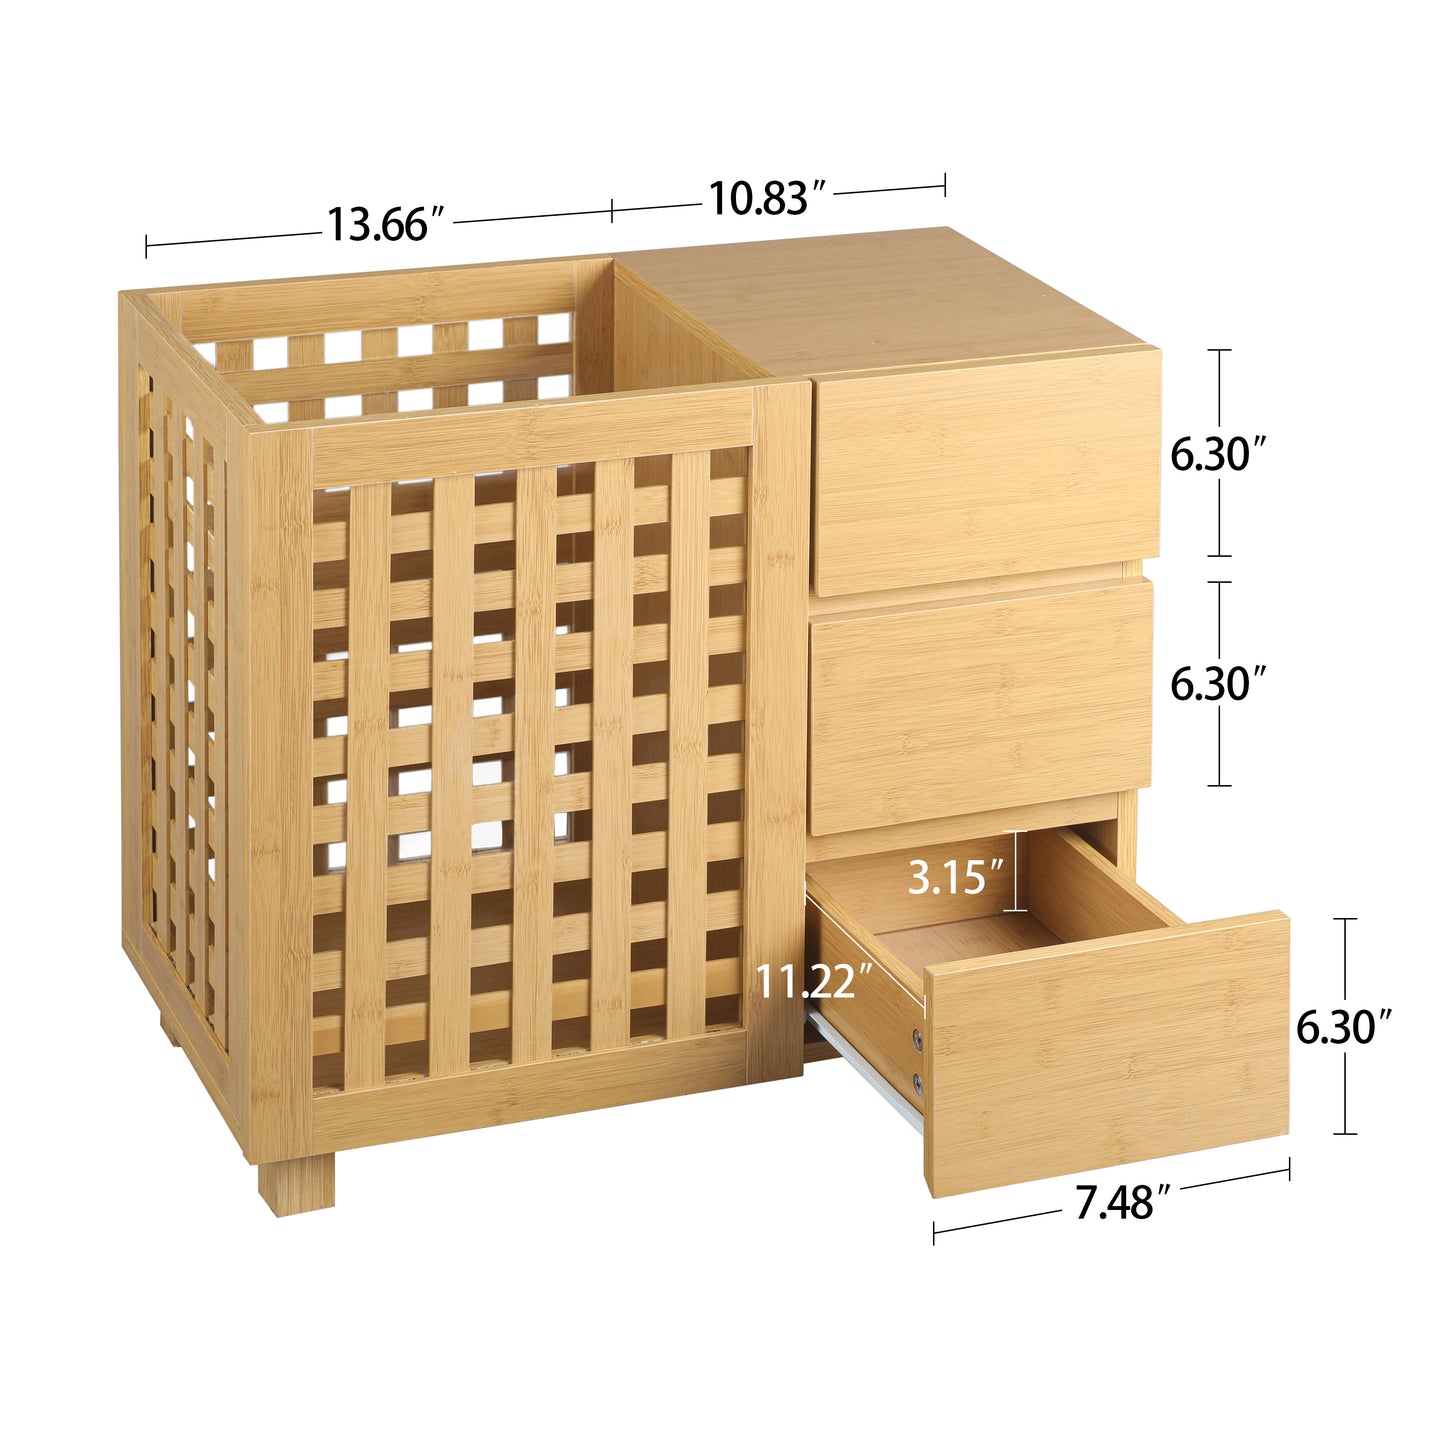 Bathroom storage basket with drawer